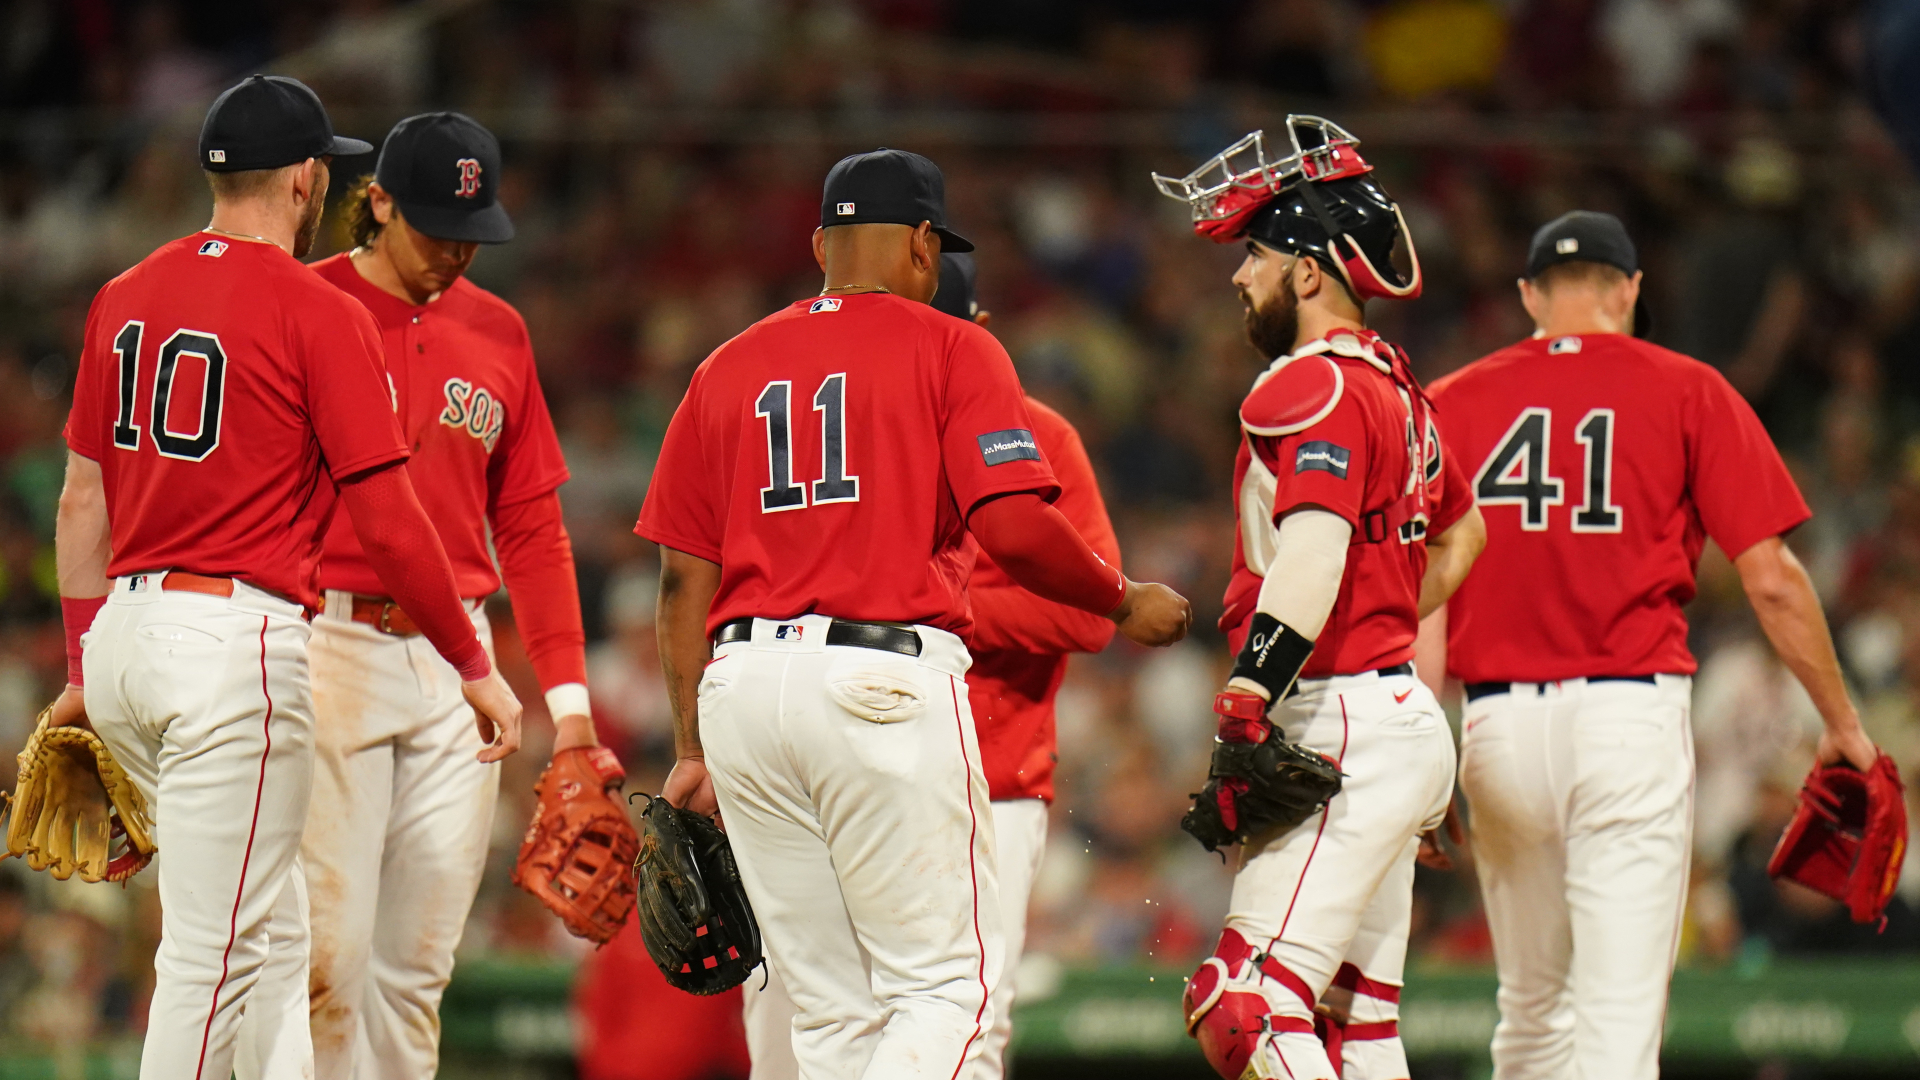 Jason Varitek has increased presence for Boston Red Sox in new